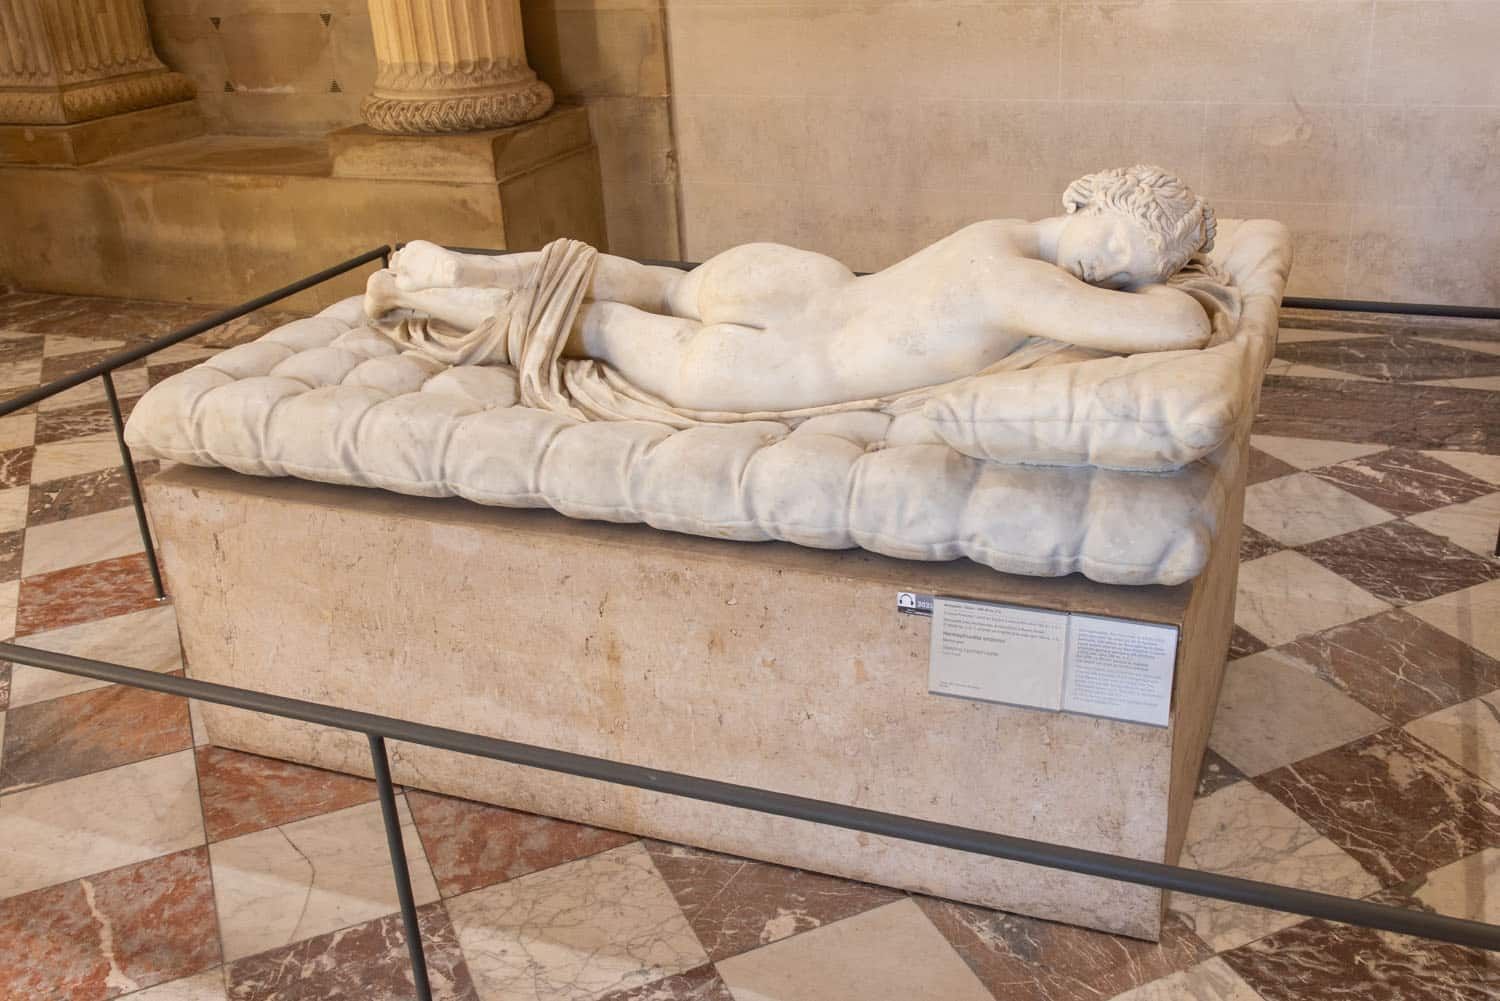 Sleeping Hermaphrodite